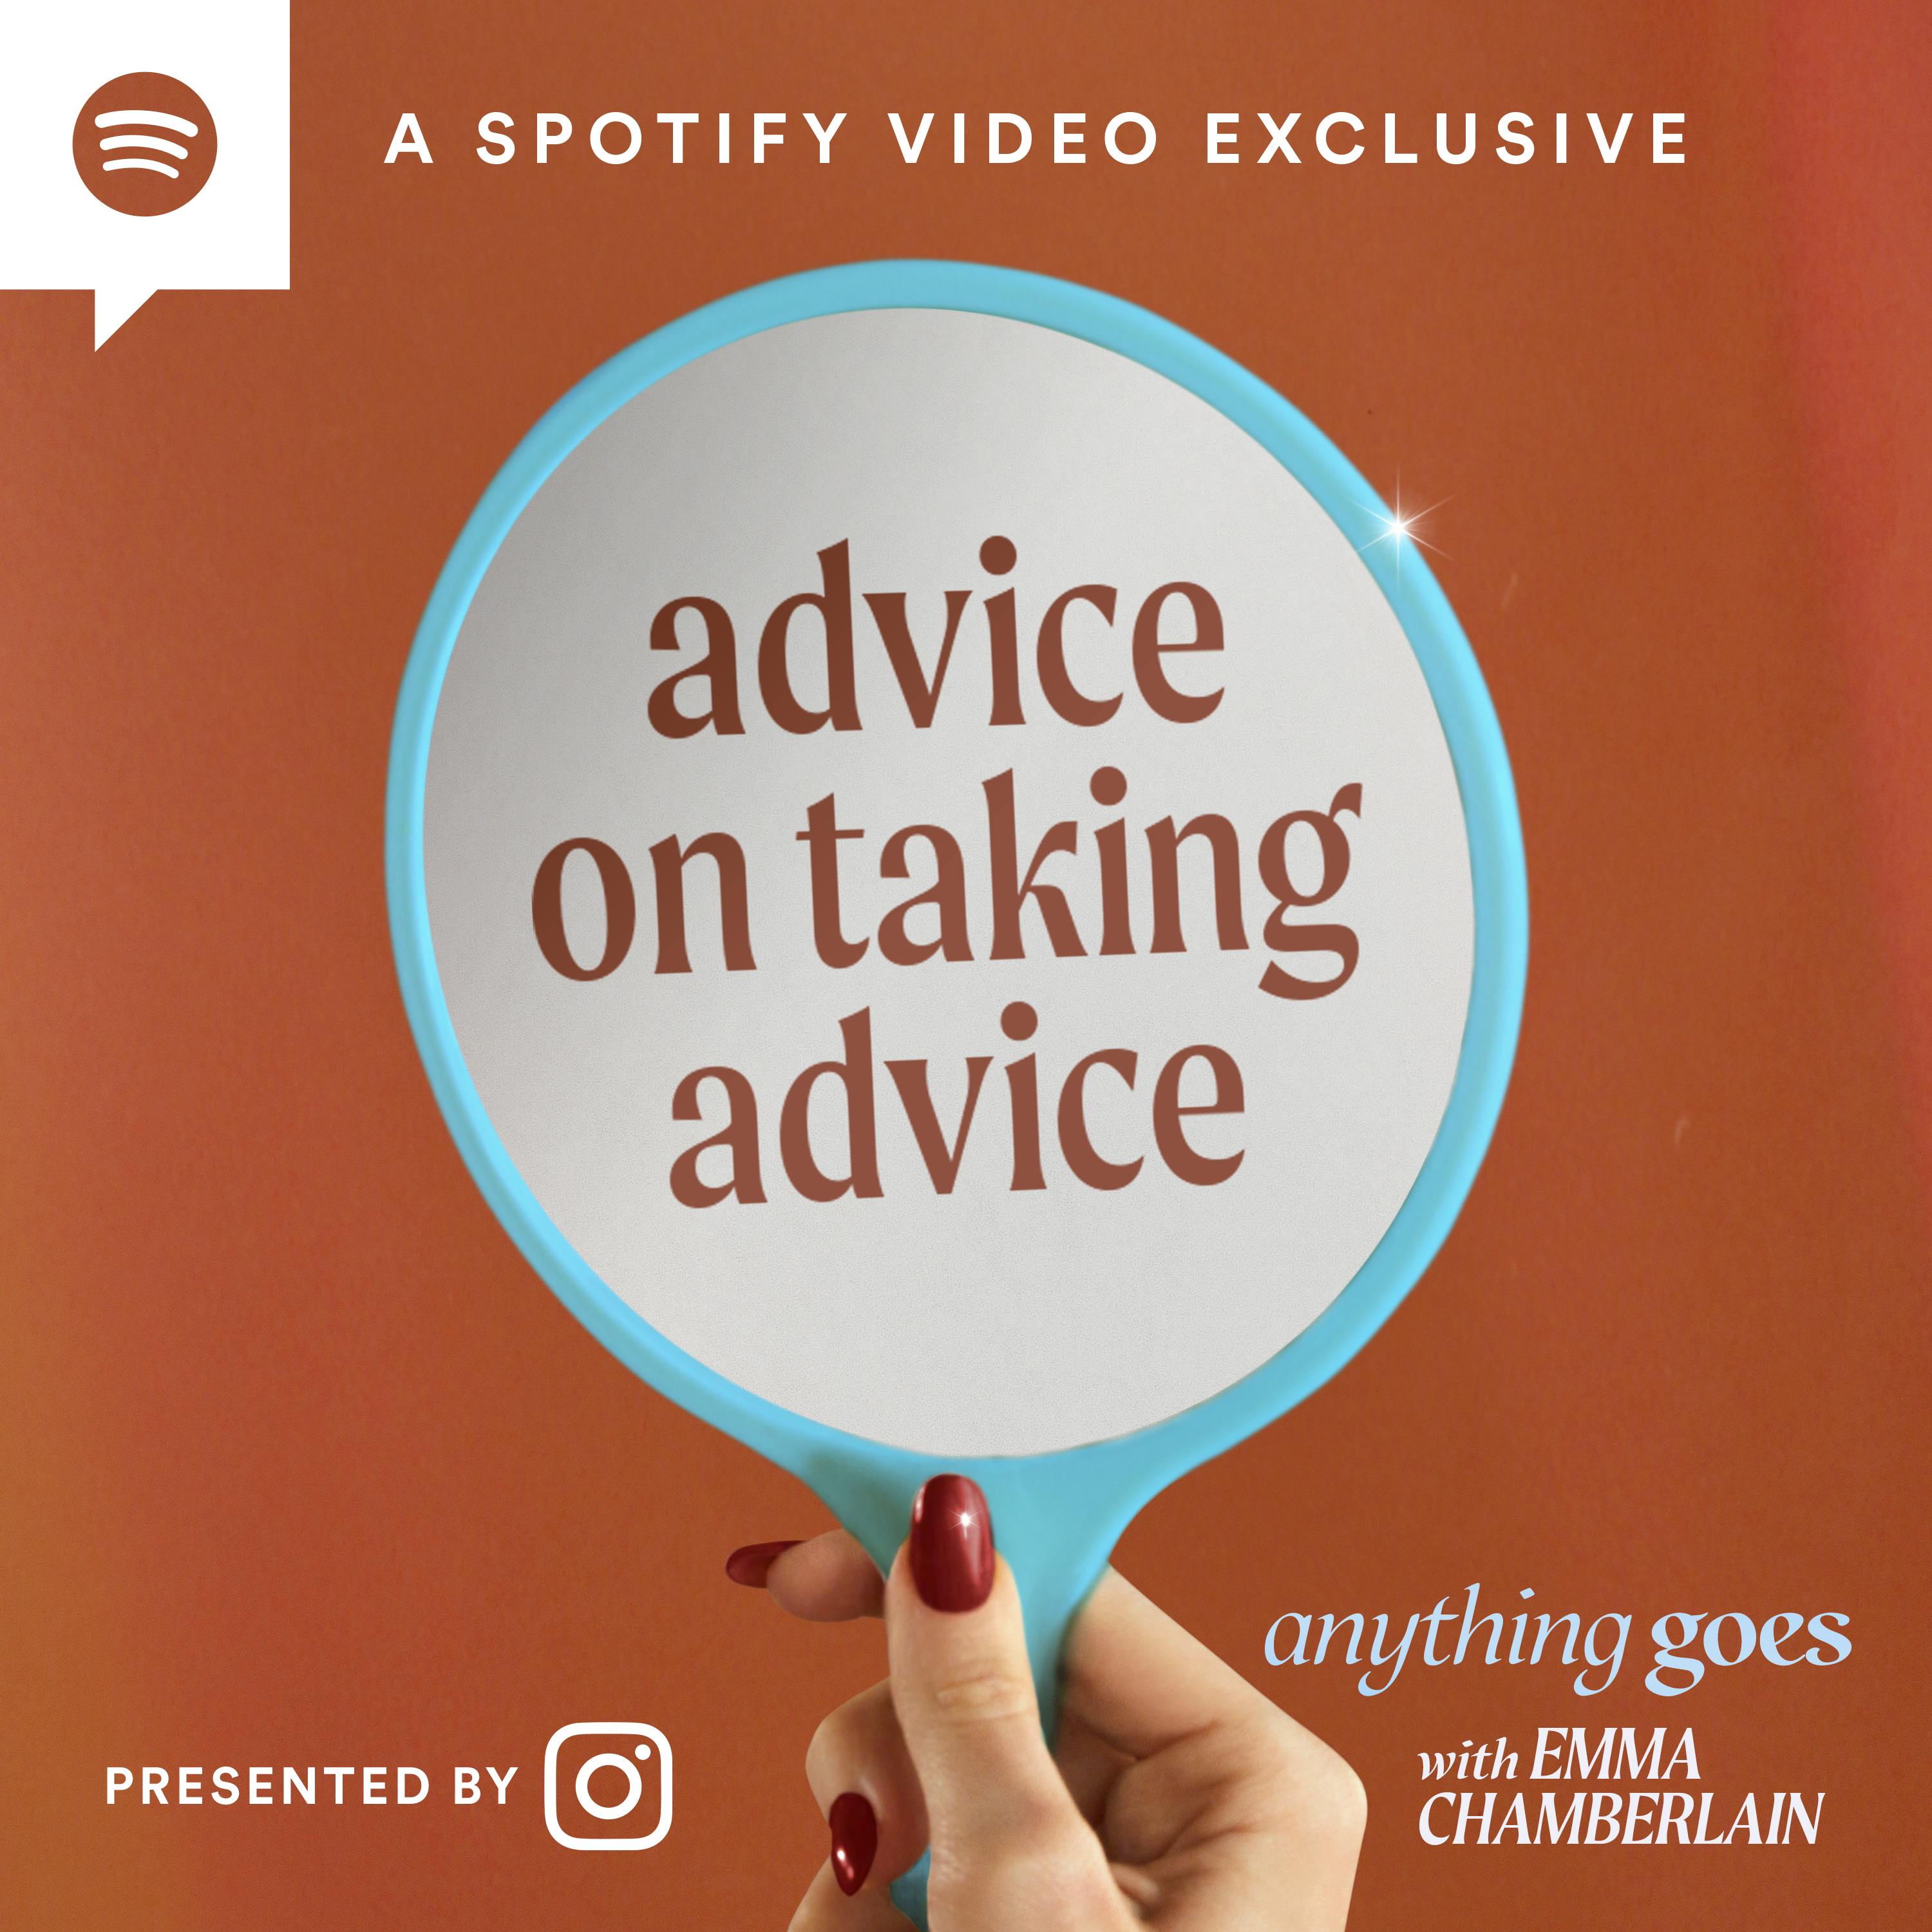 advice on taking advice [video]